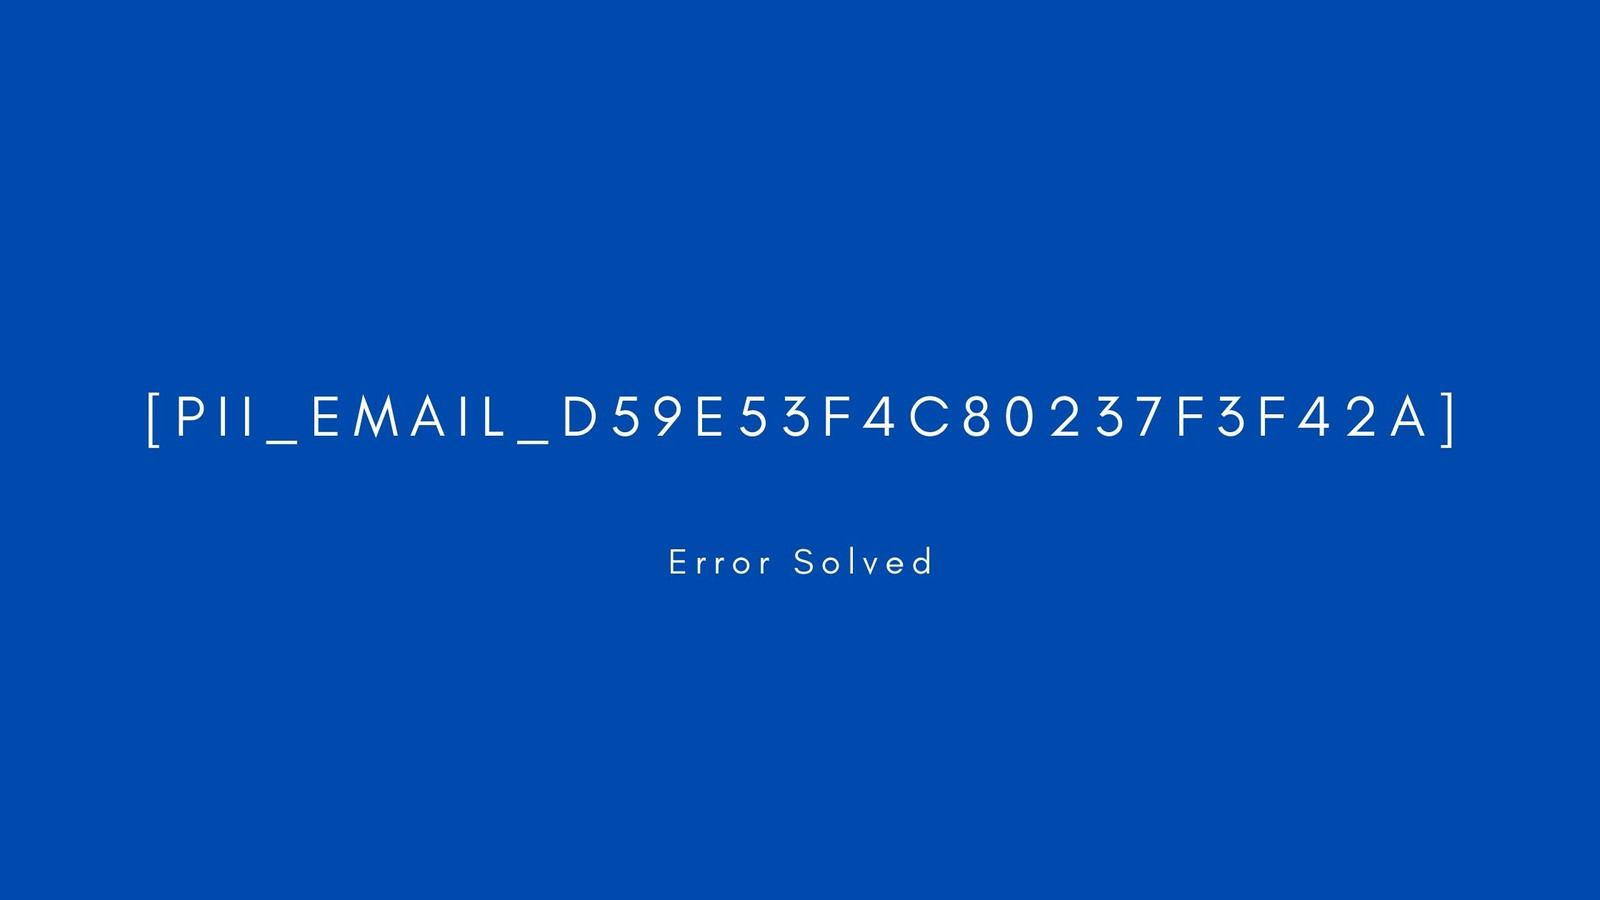 [pii_email_d59e53f4c80237f3f42a] Error resolved